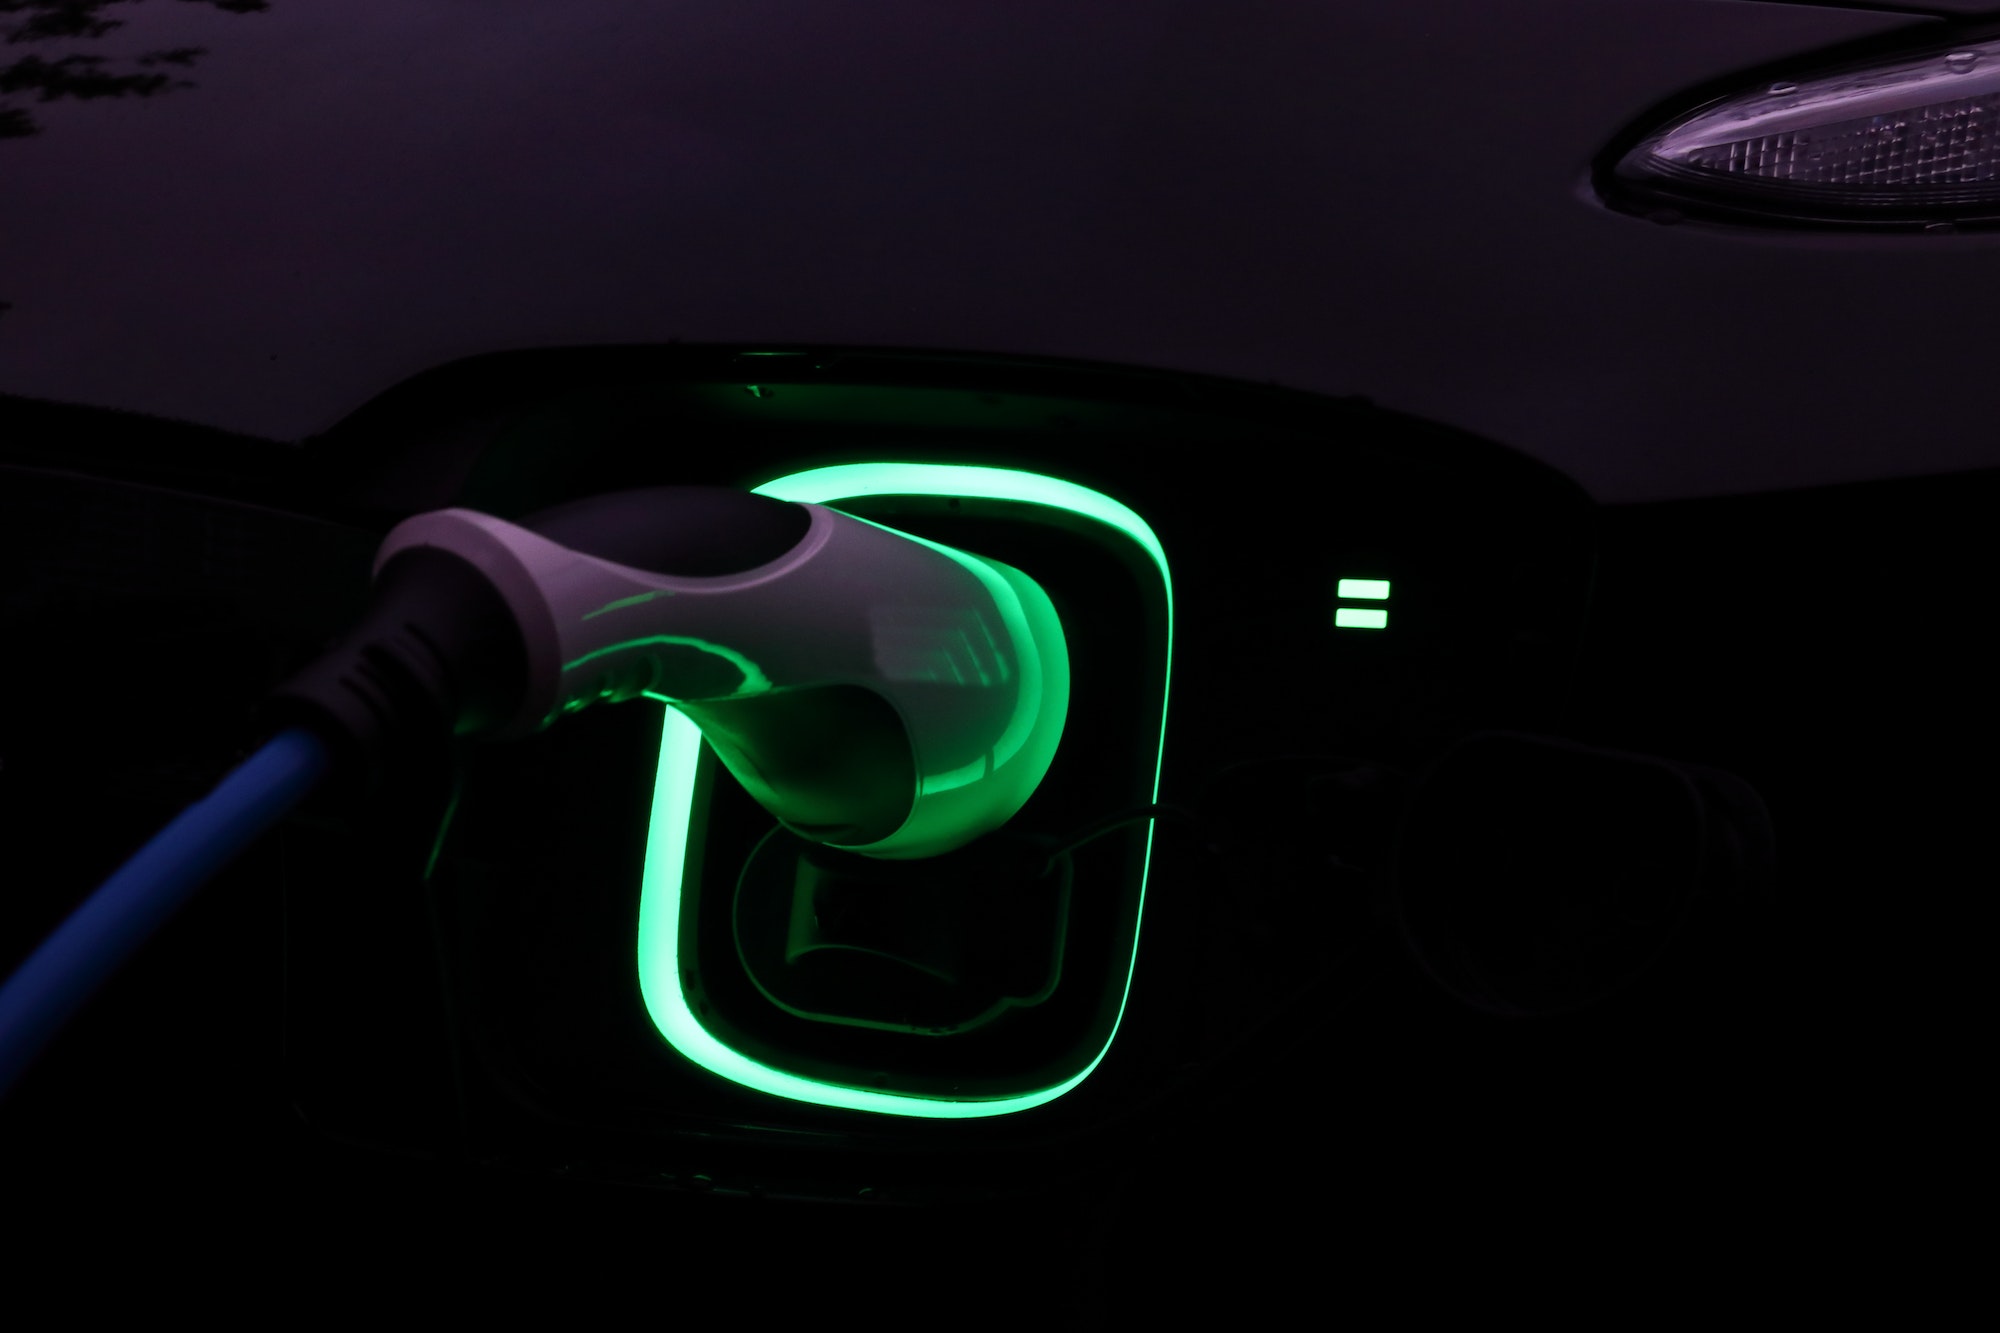 Electric car charging at night